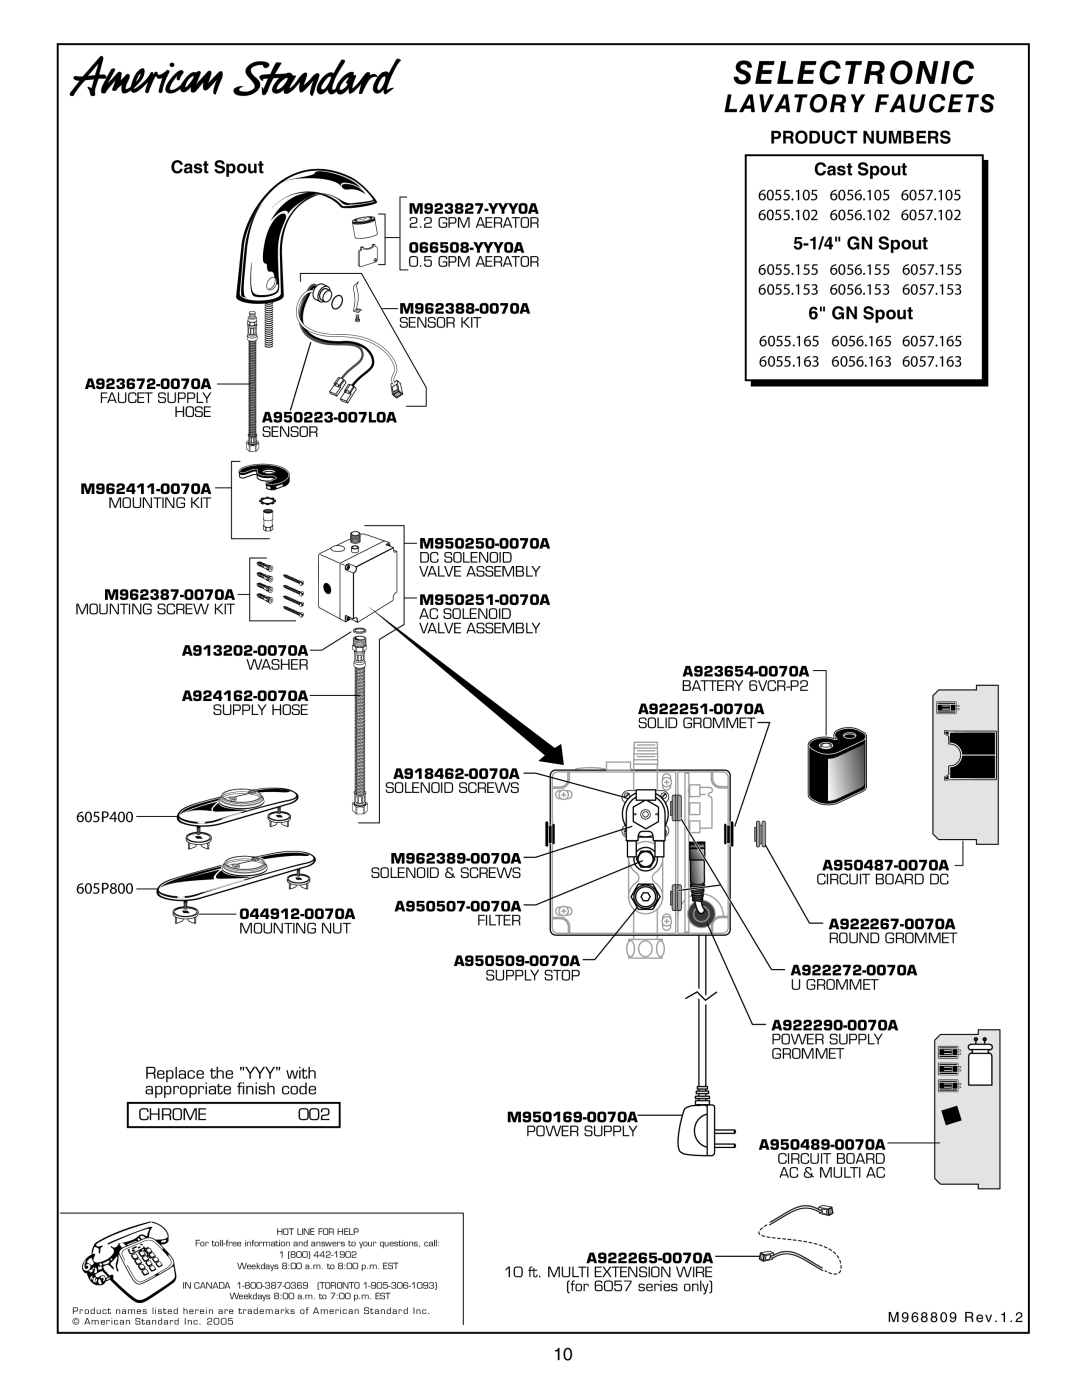 American Standard Proximity Faucet Selectronic, Lavatory Faucets, PRODUCT NUMBERS Cast Spout, 5-1/4GN Spout, 6055.105 